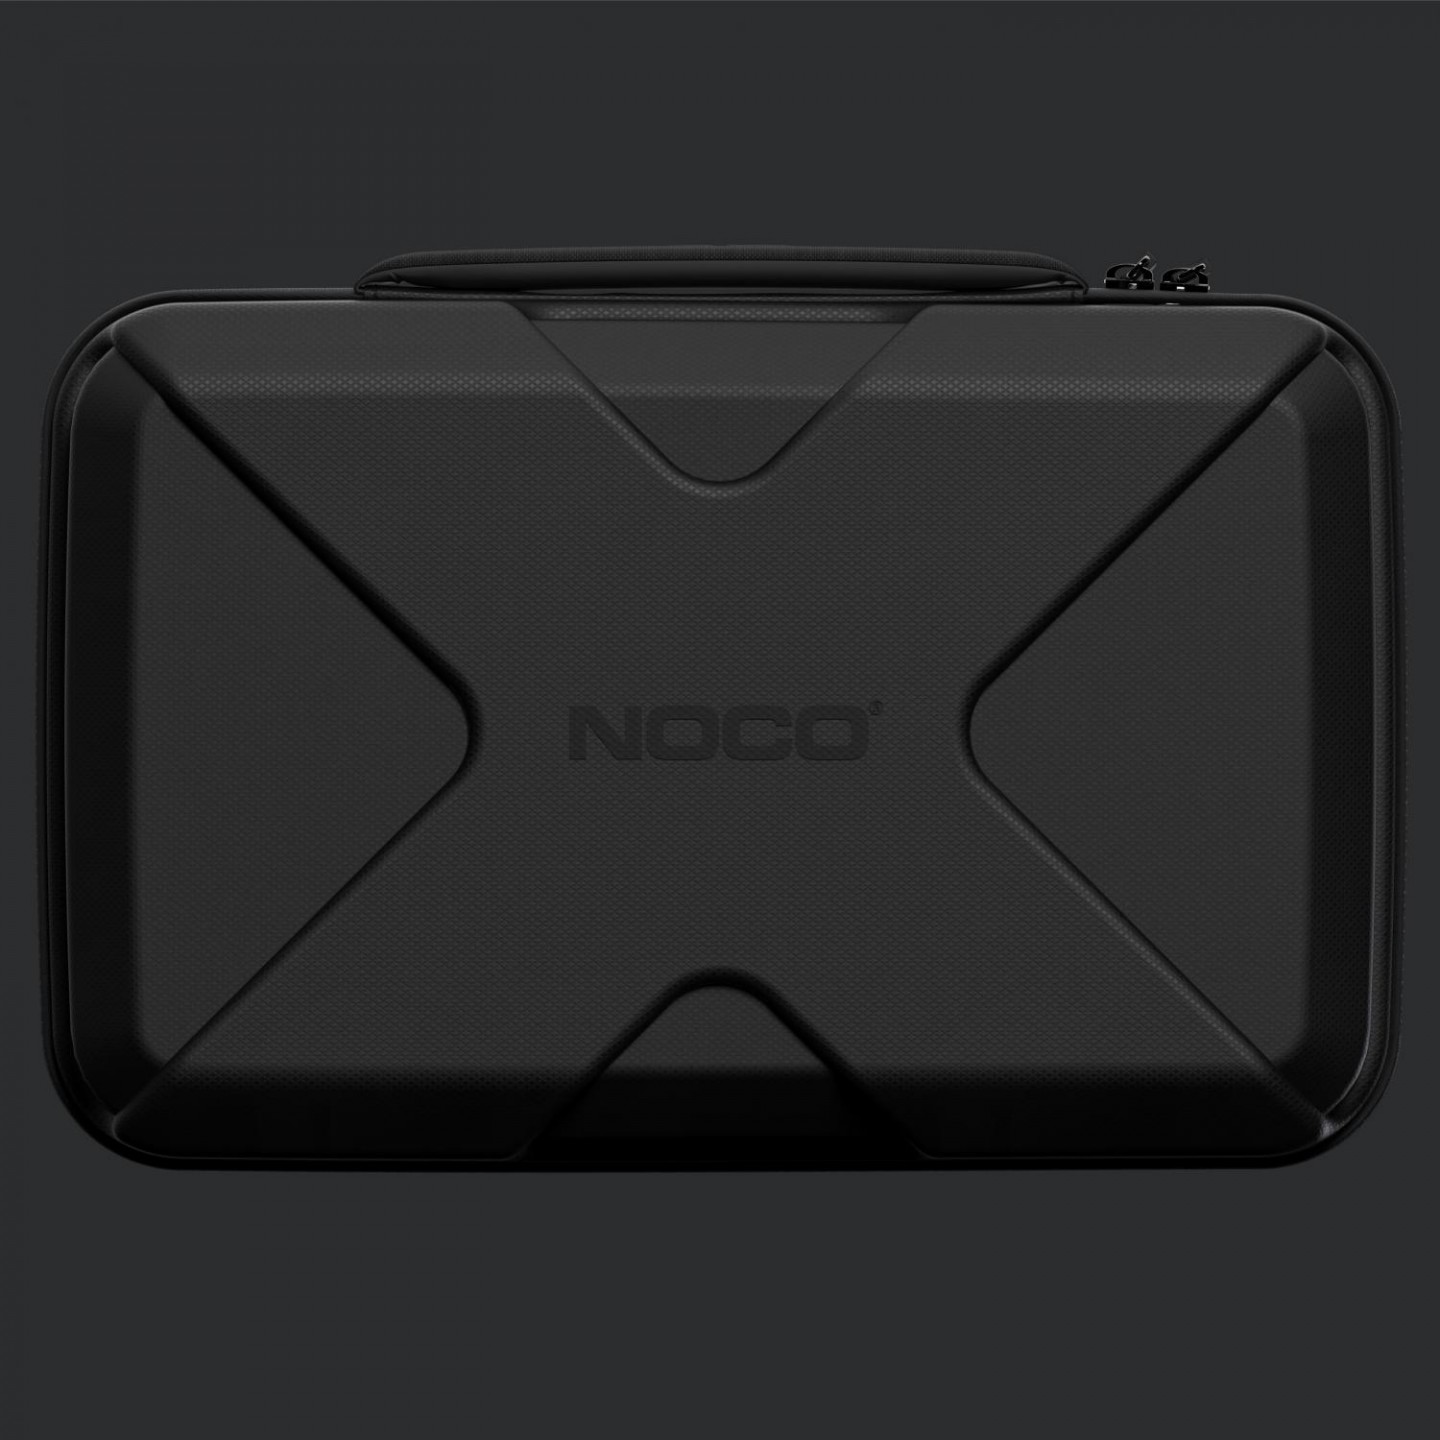 NOCO Boost X GBX155 4250A 12V UltraSafe Portable Australia